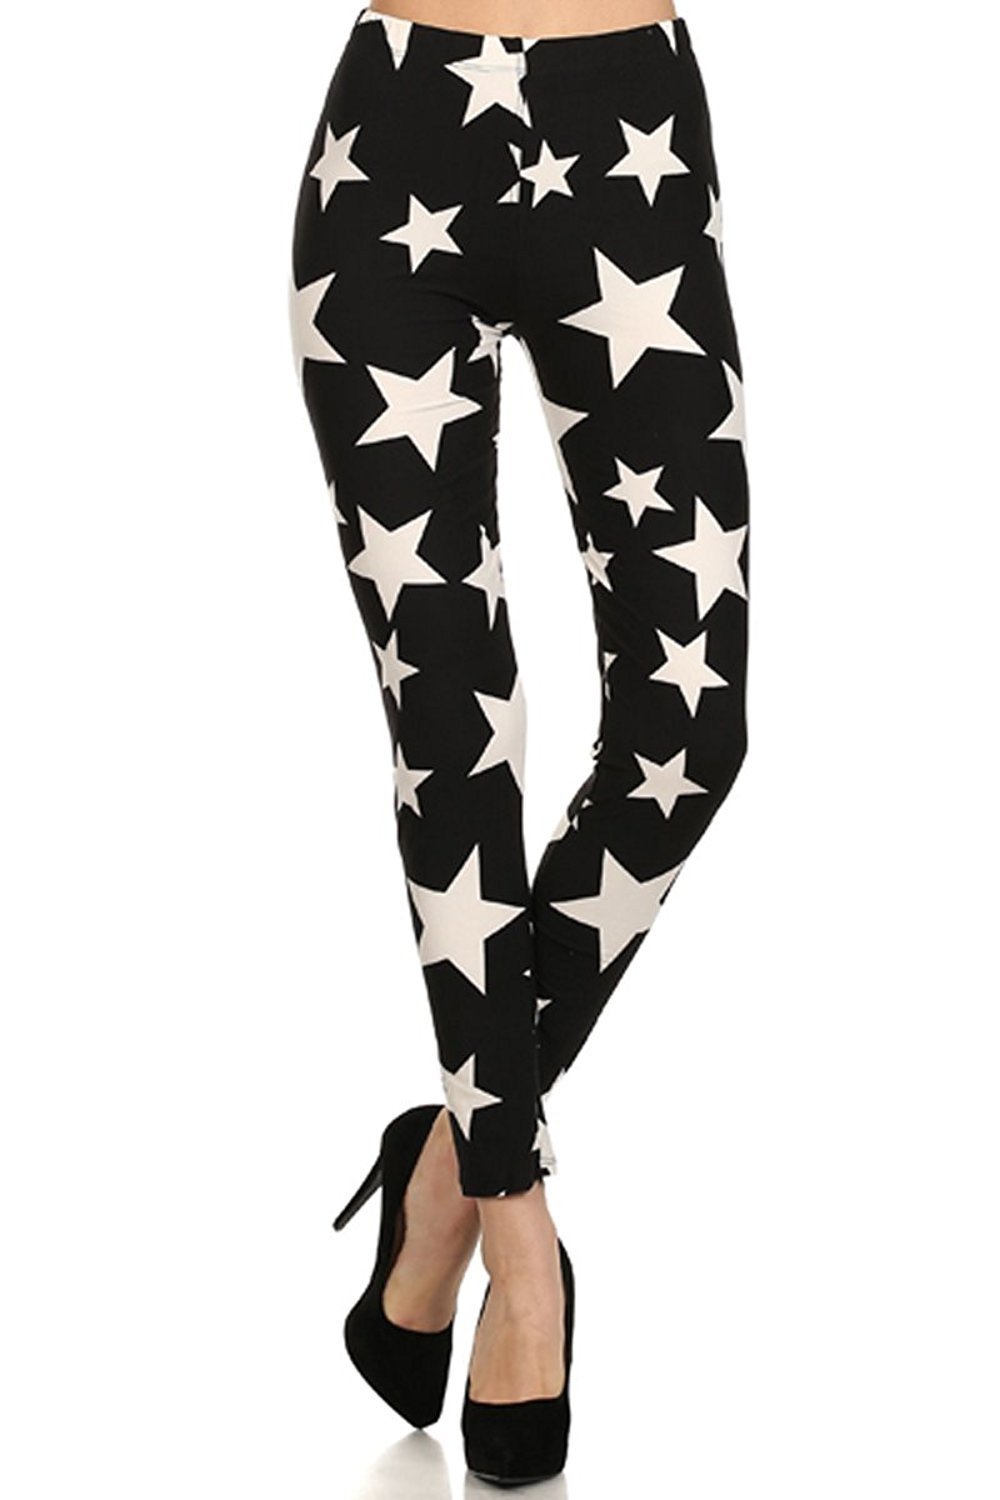 Black & White Dot legging – All That & More boutique